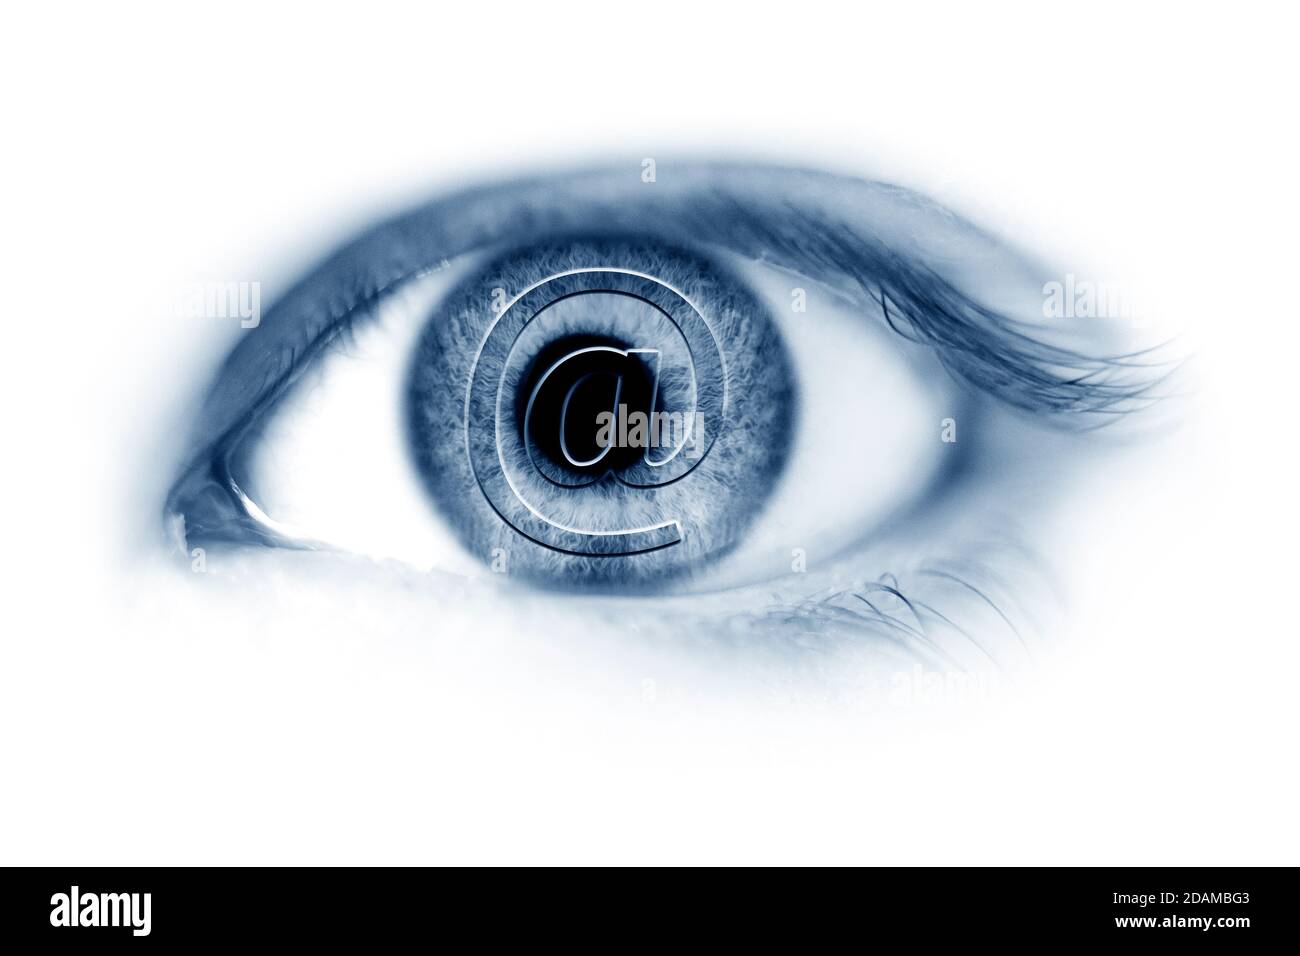 Human eye with at symbol, illustration. Stock Photo